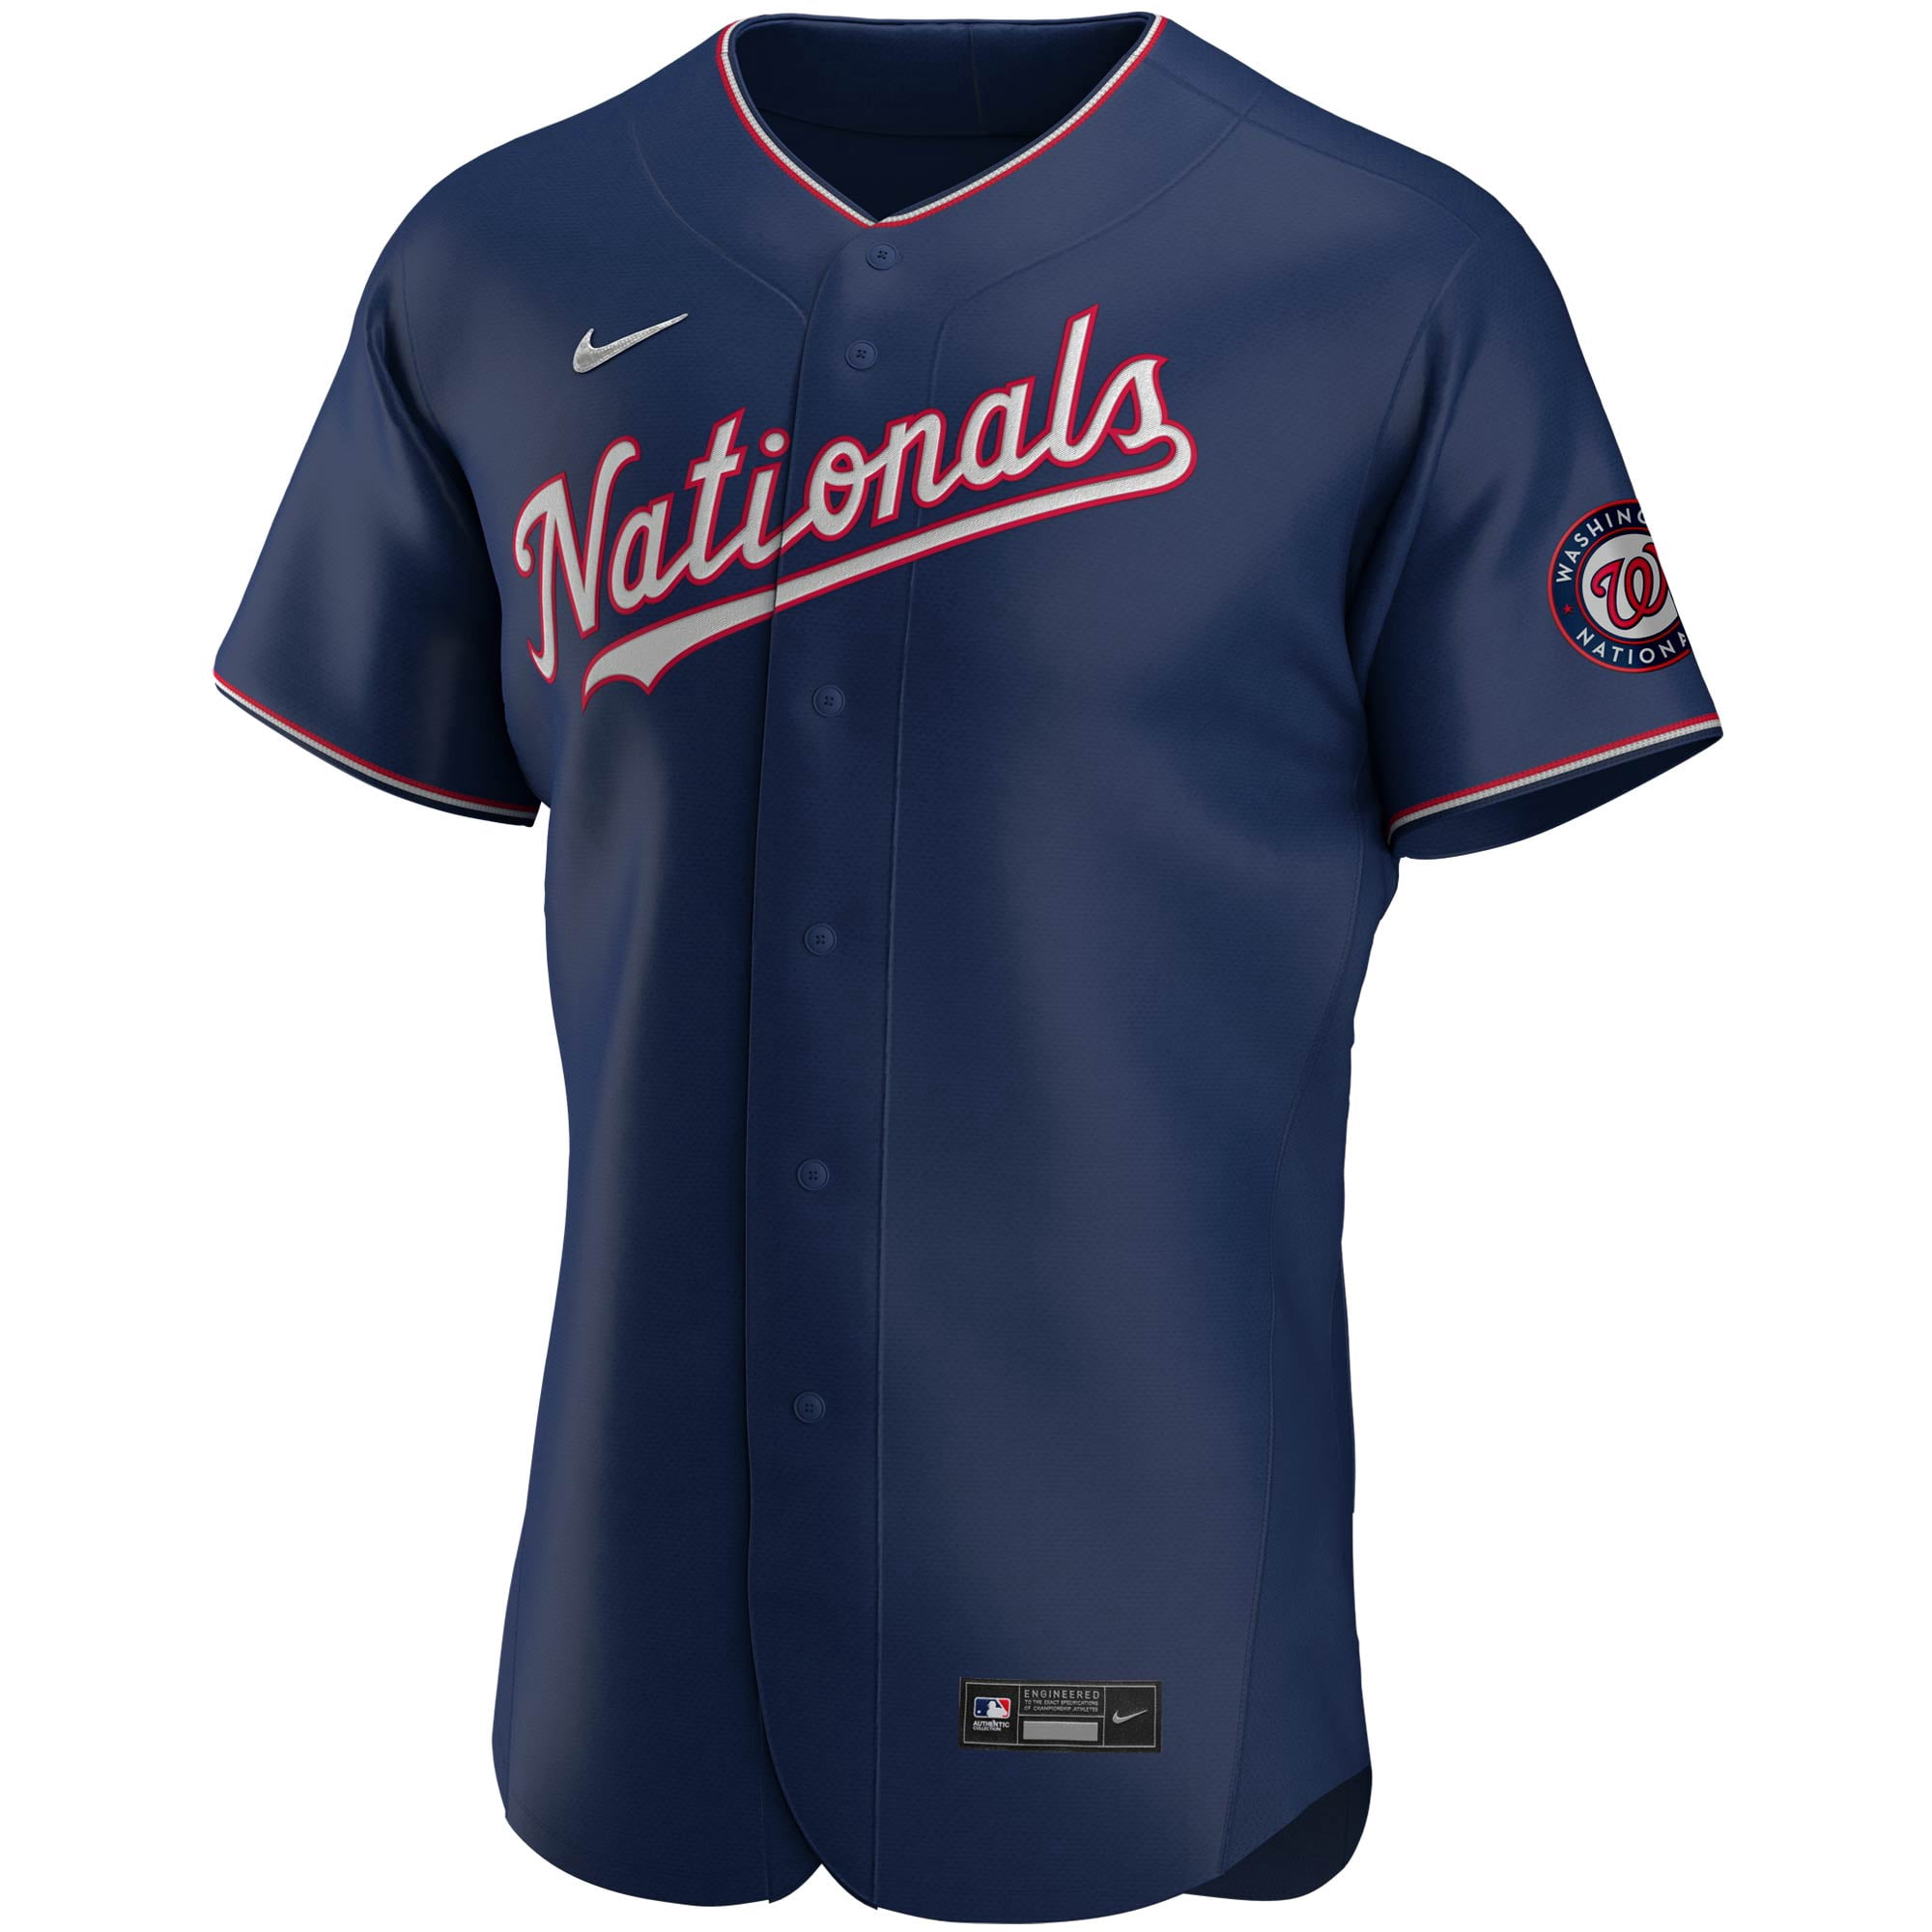 Men's Nike Navy Washington Nationals Alternate Authentic Team Jersey 